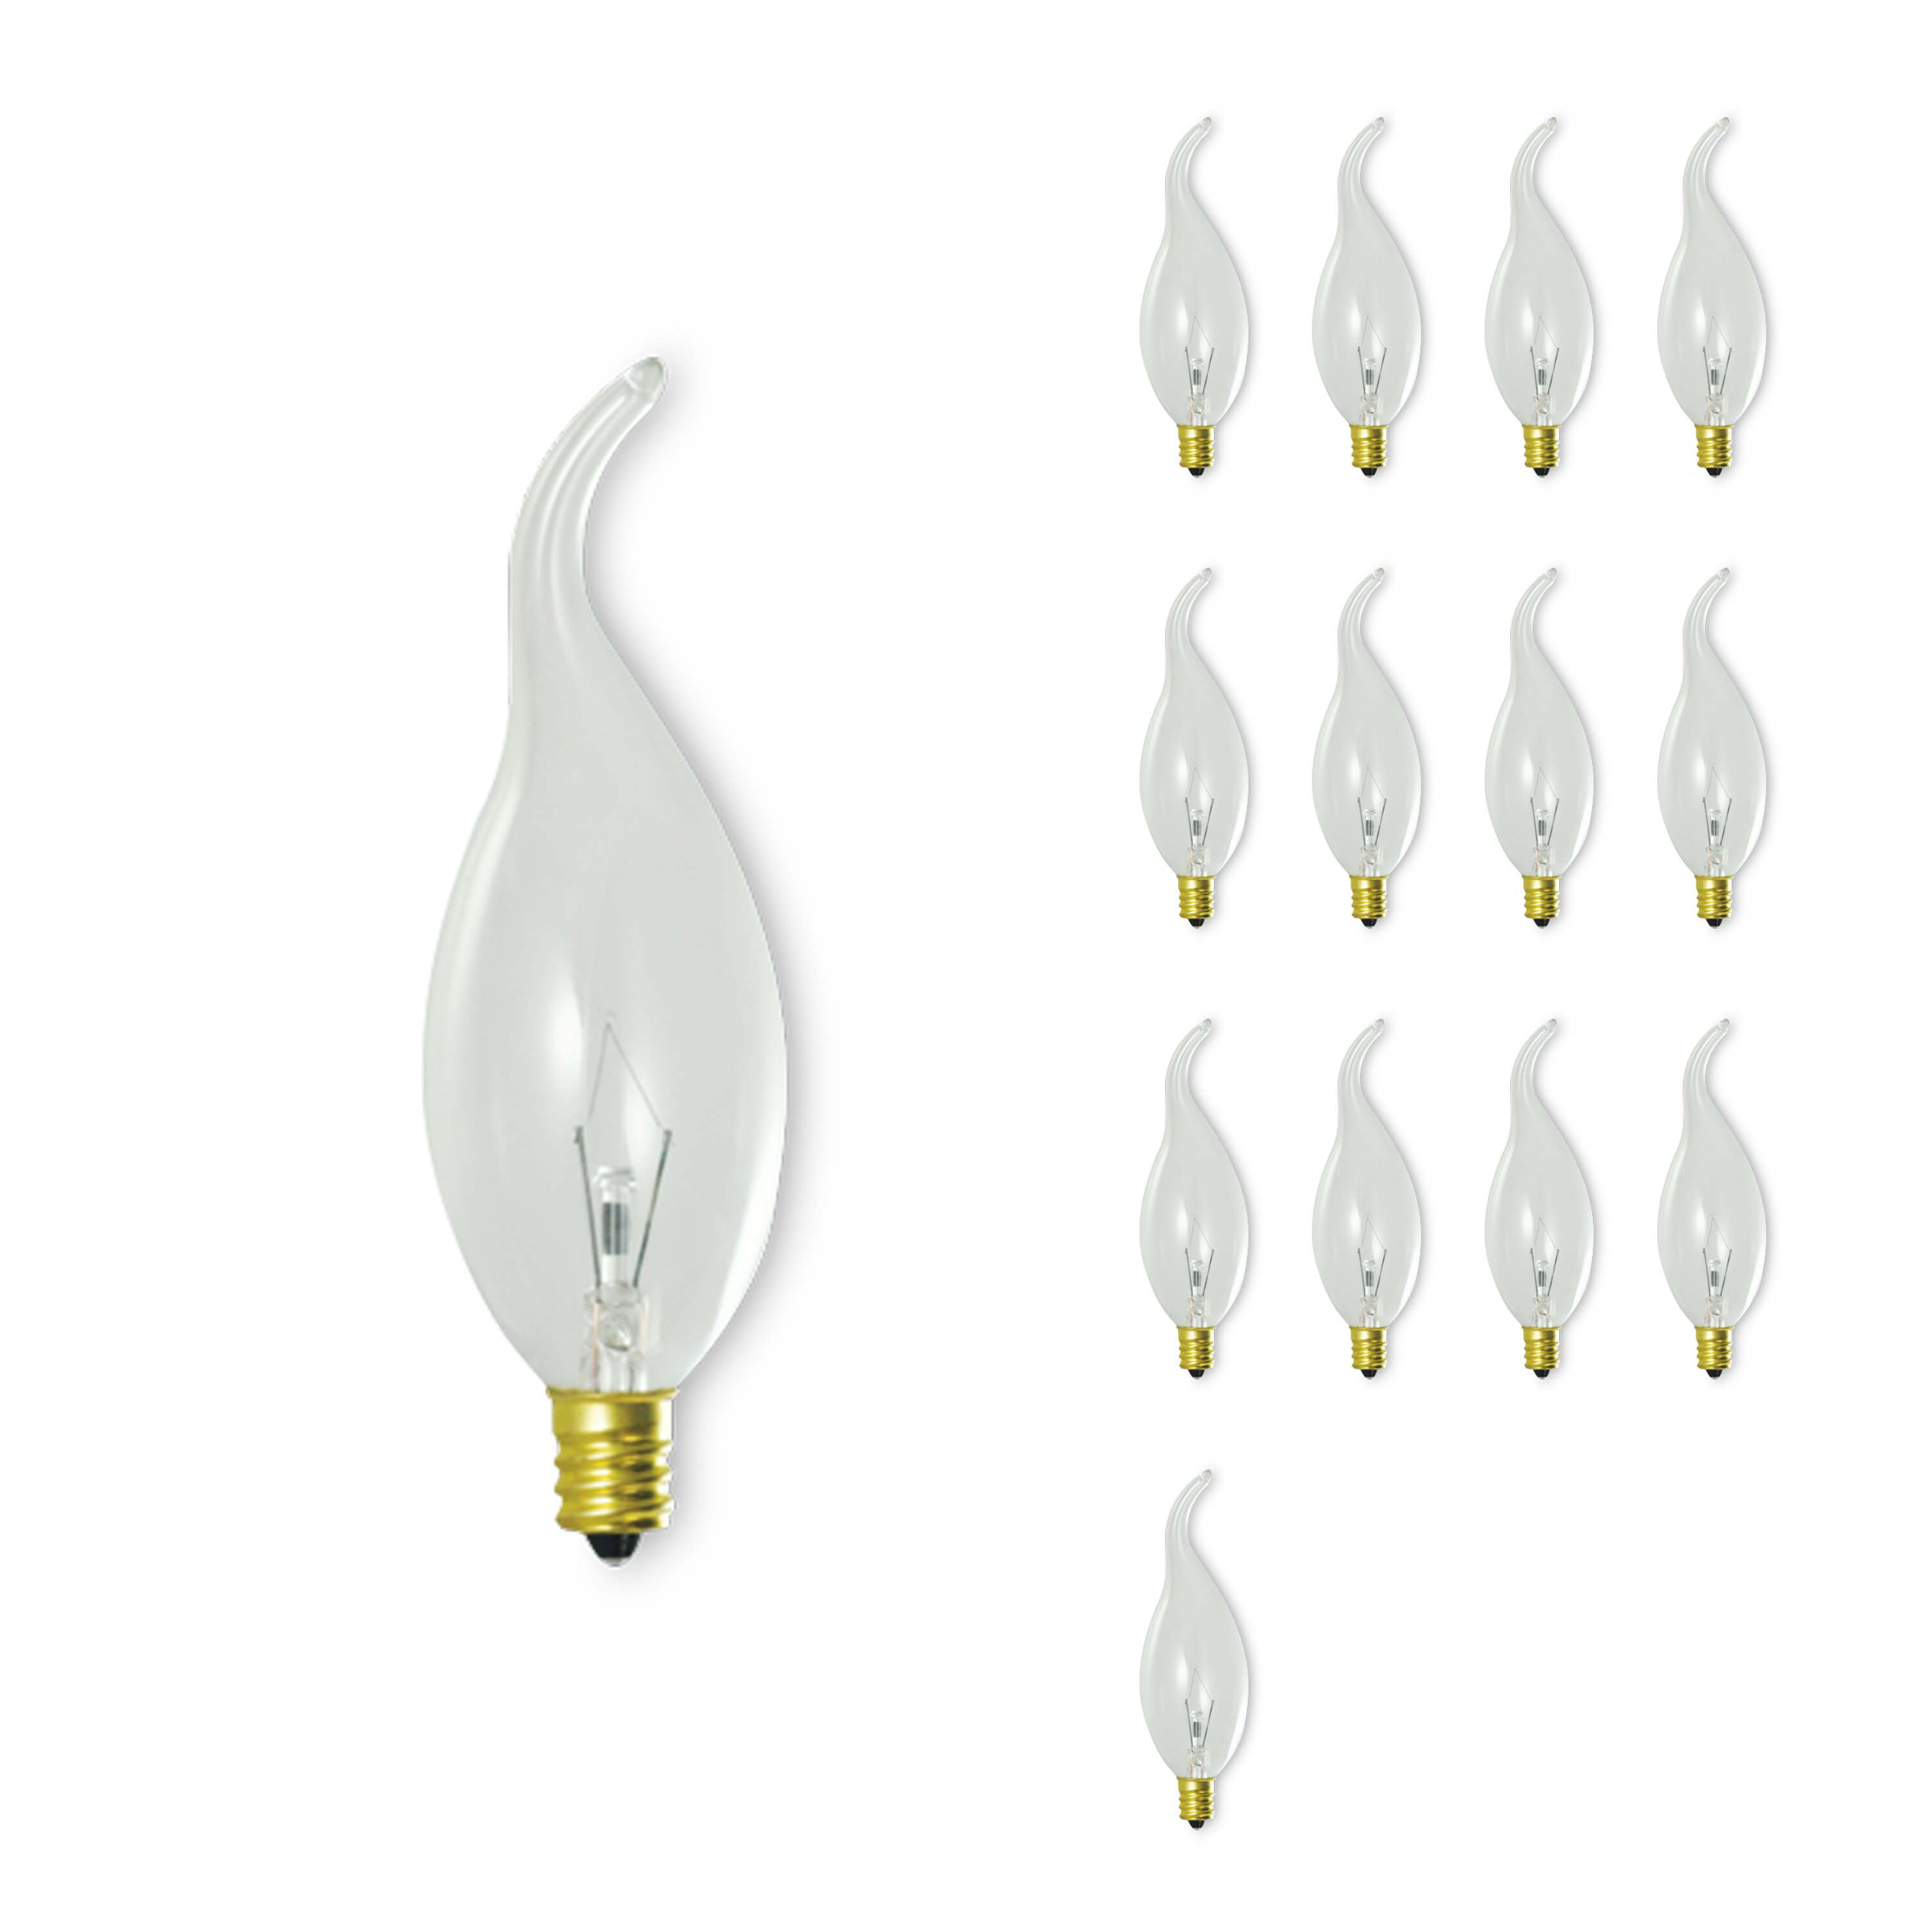 Bulbrite CA8 Bent Tip Decorative Bulb, Clear/Warm White, 15 W, 130 V